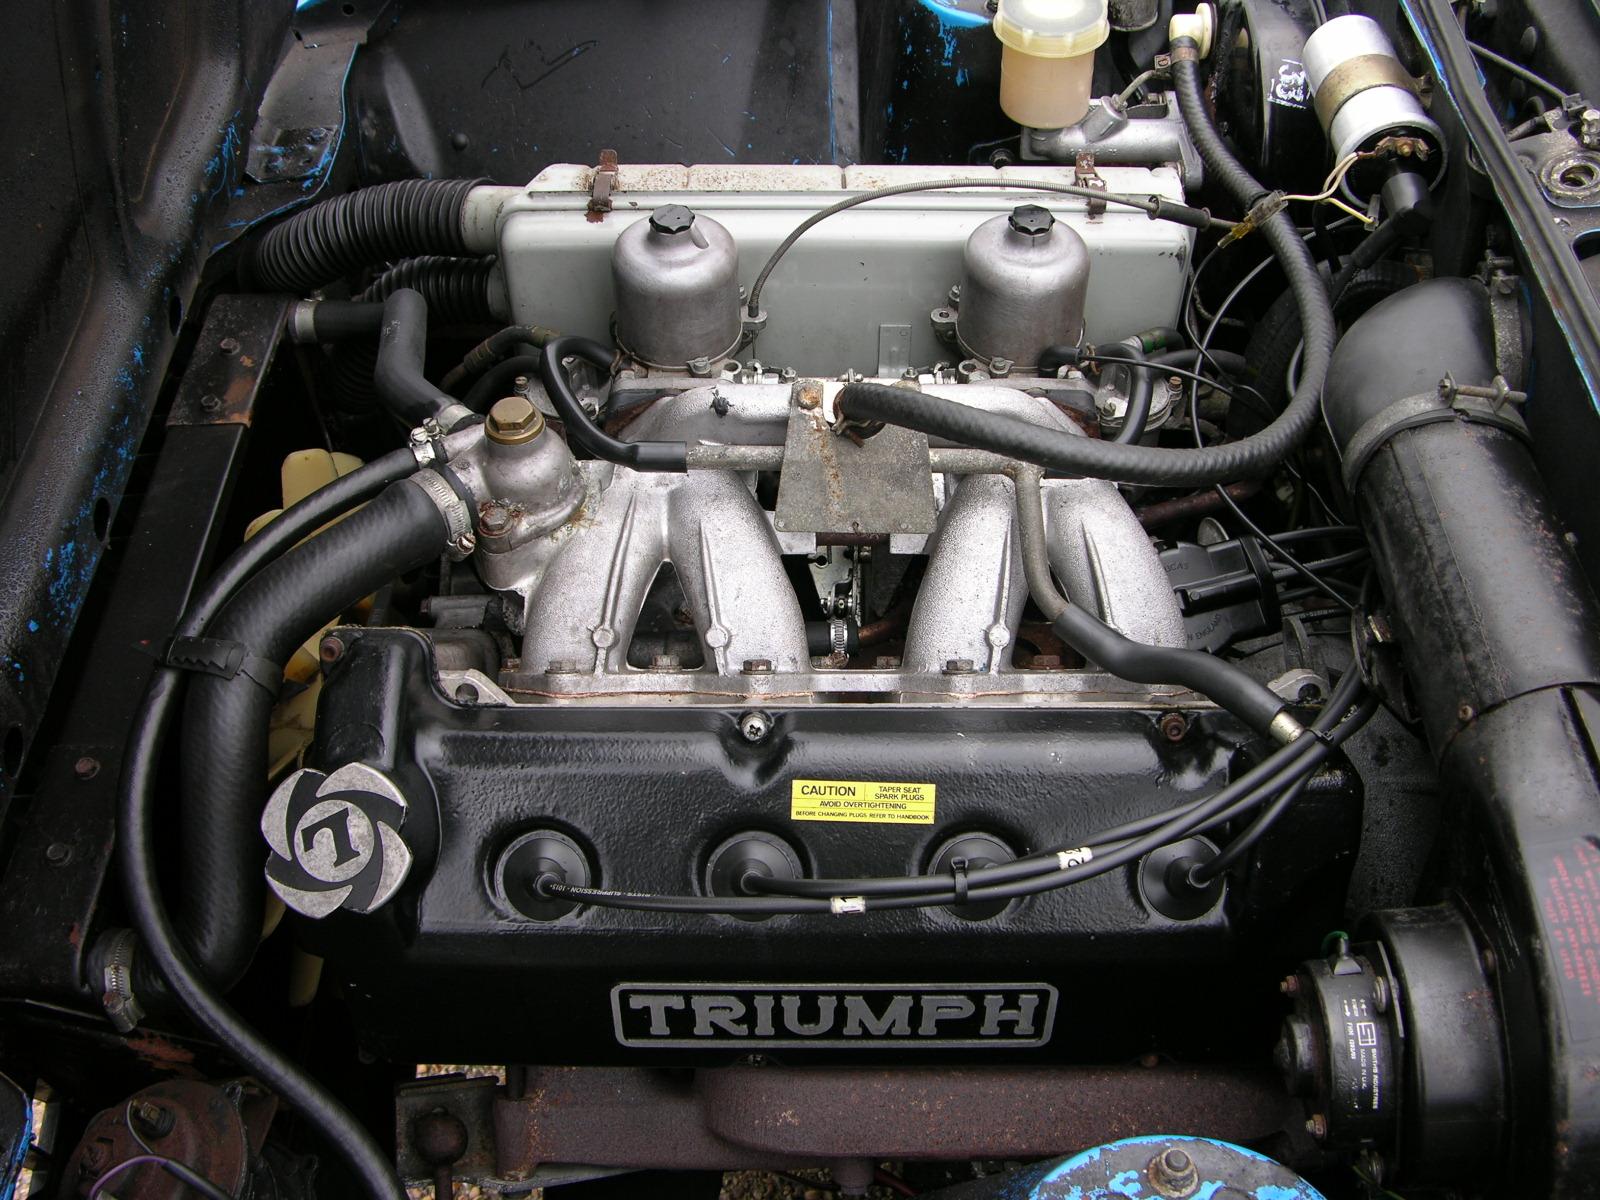 Frem ecstasy Mod viljen File:1974 Triumph Dolomite Sprint - Flickr - The Car Spy (21).jpg -  Wikimedia Commons